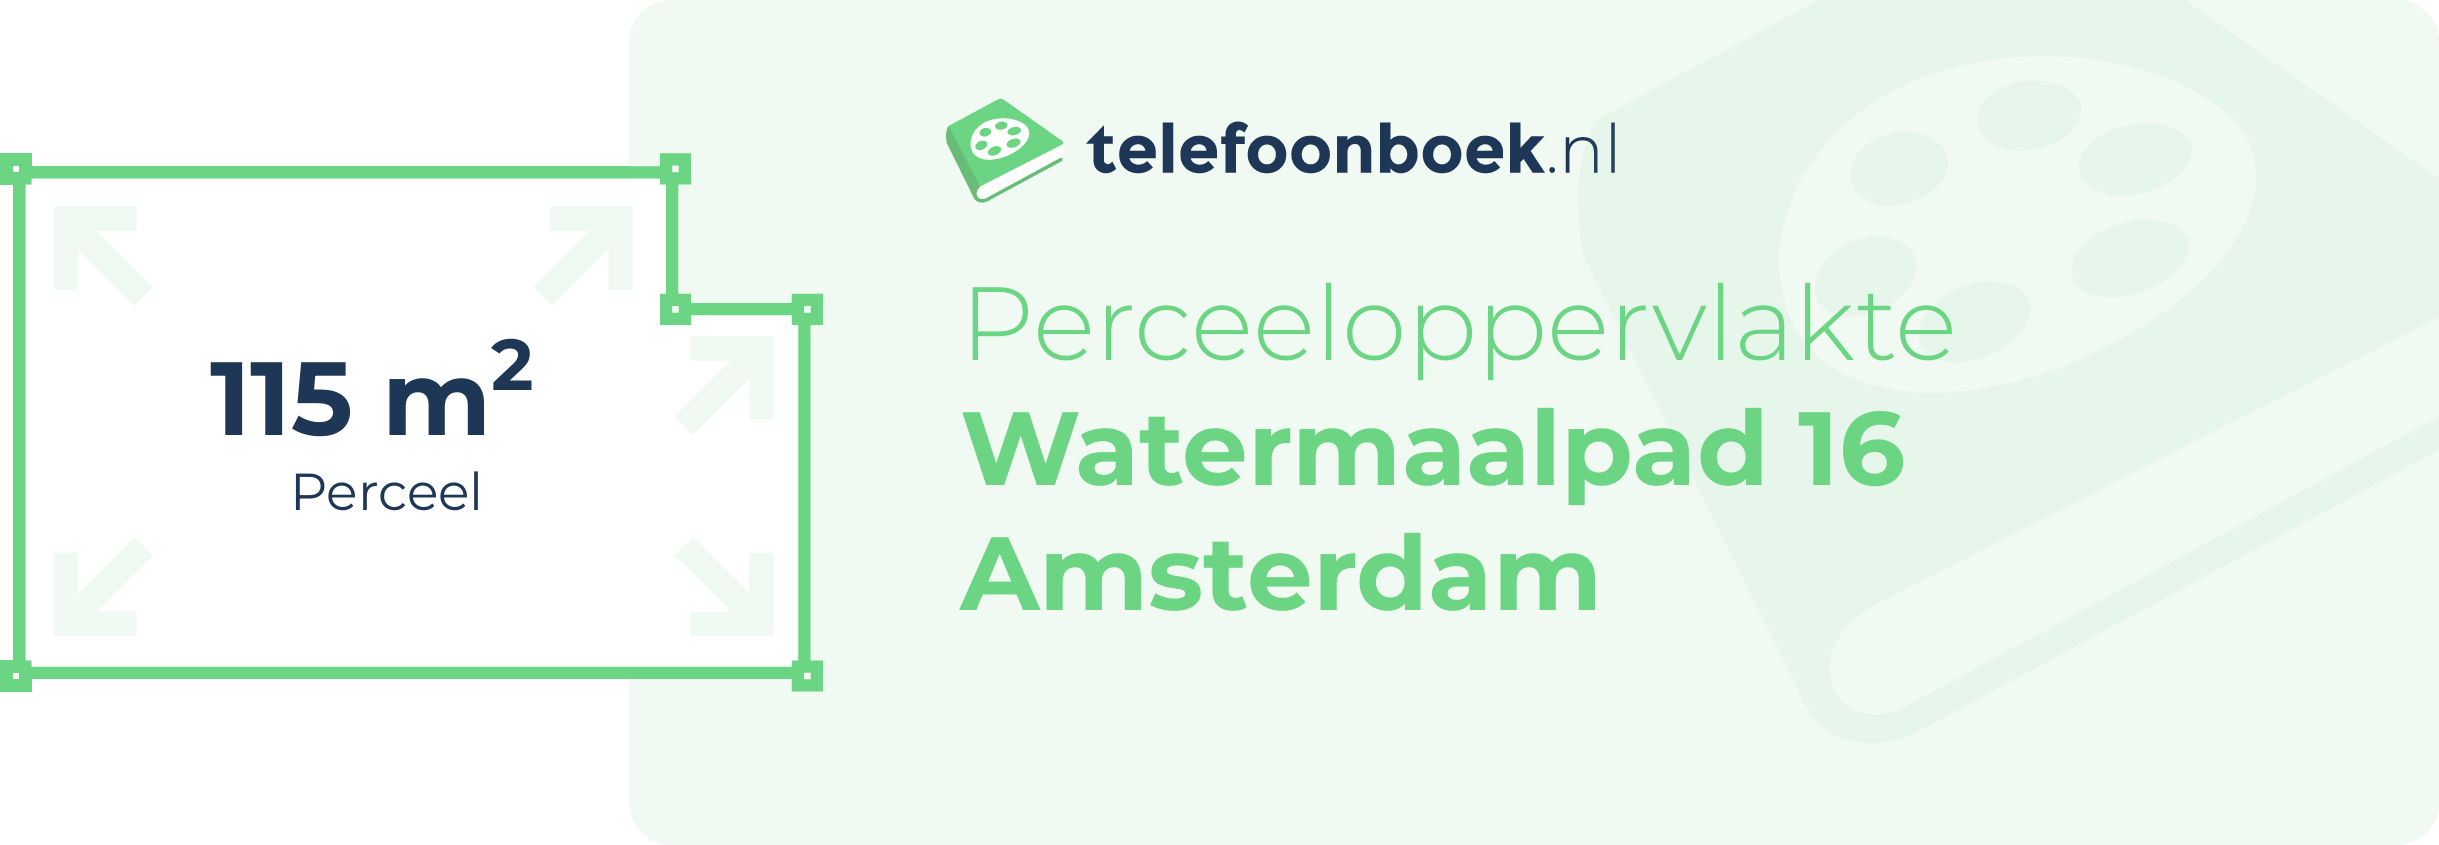 Perceeloppervlakte Watermaalpad 16 Amsterdam